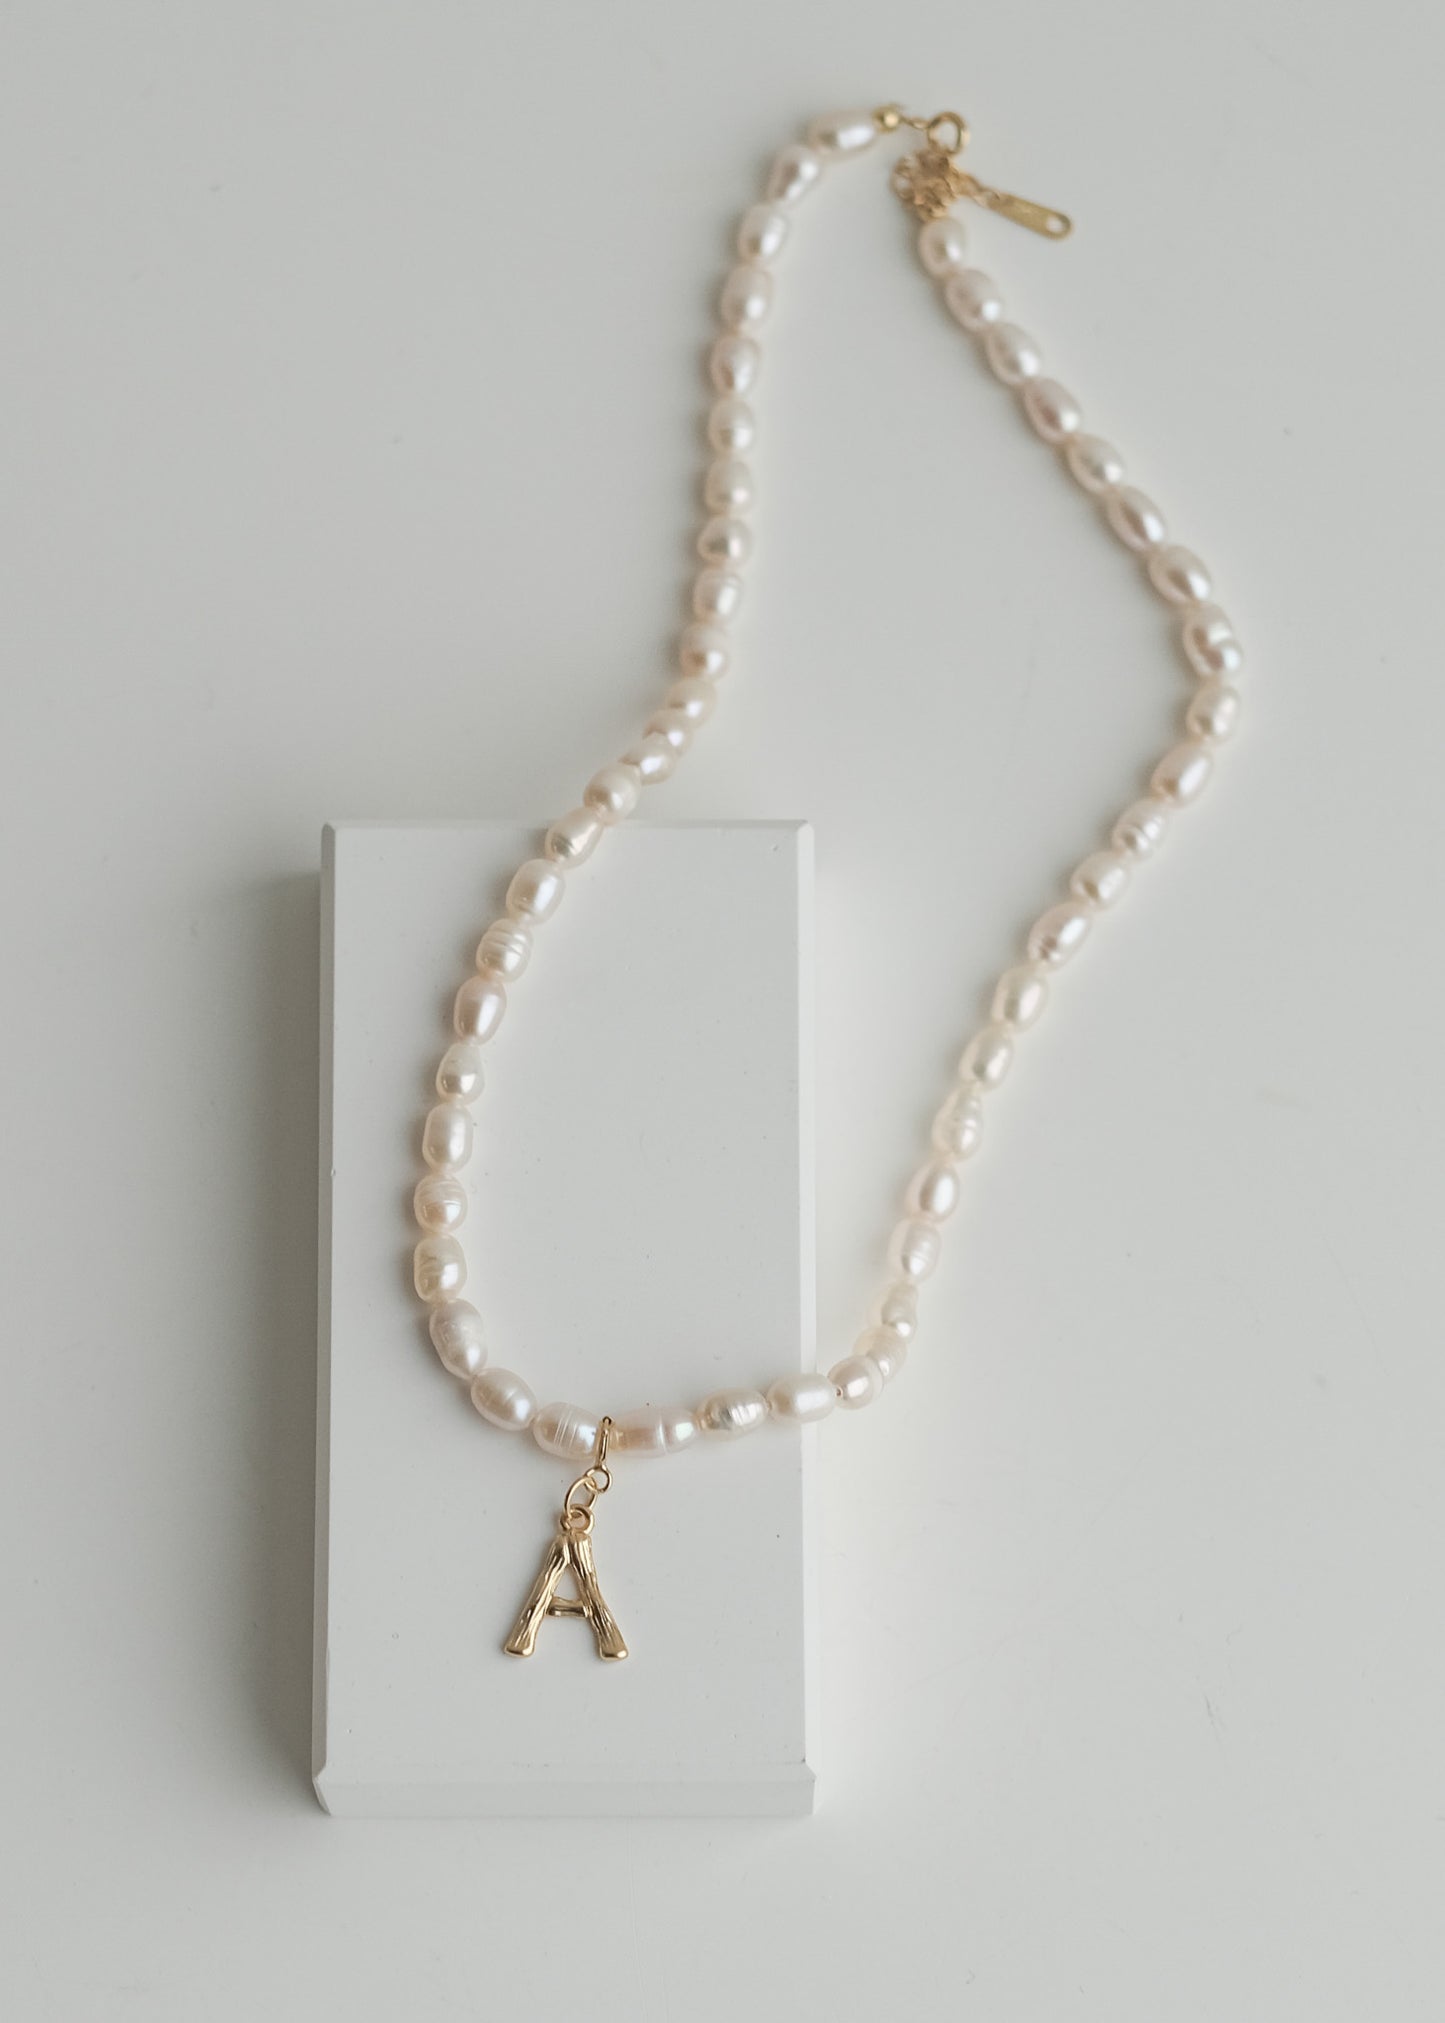 Alphabet Necklaces